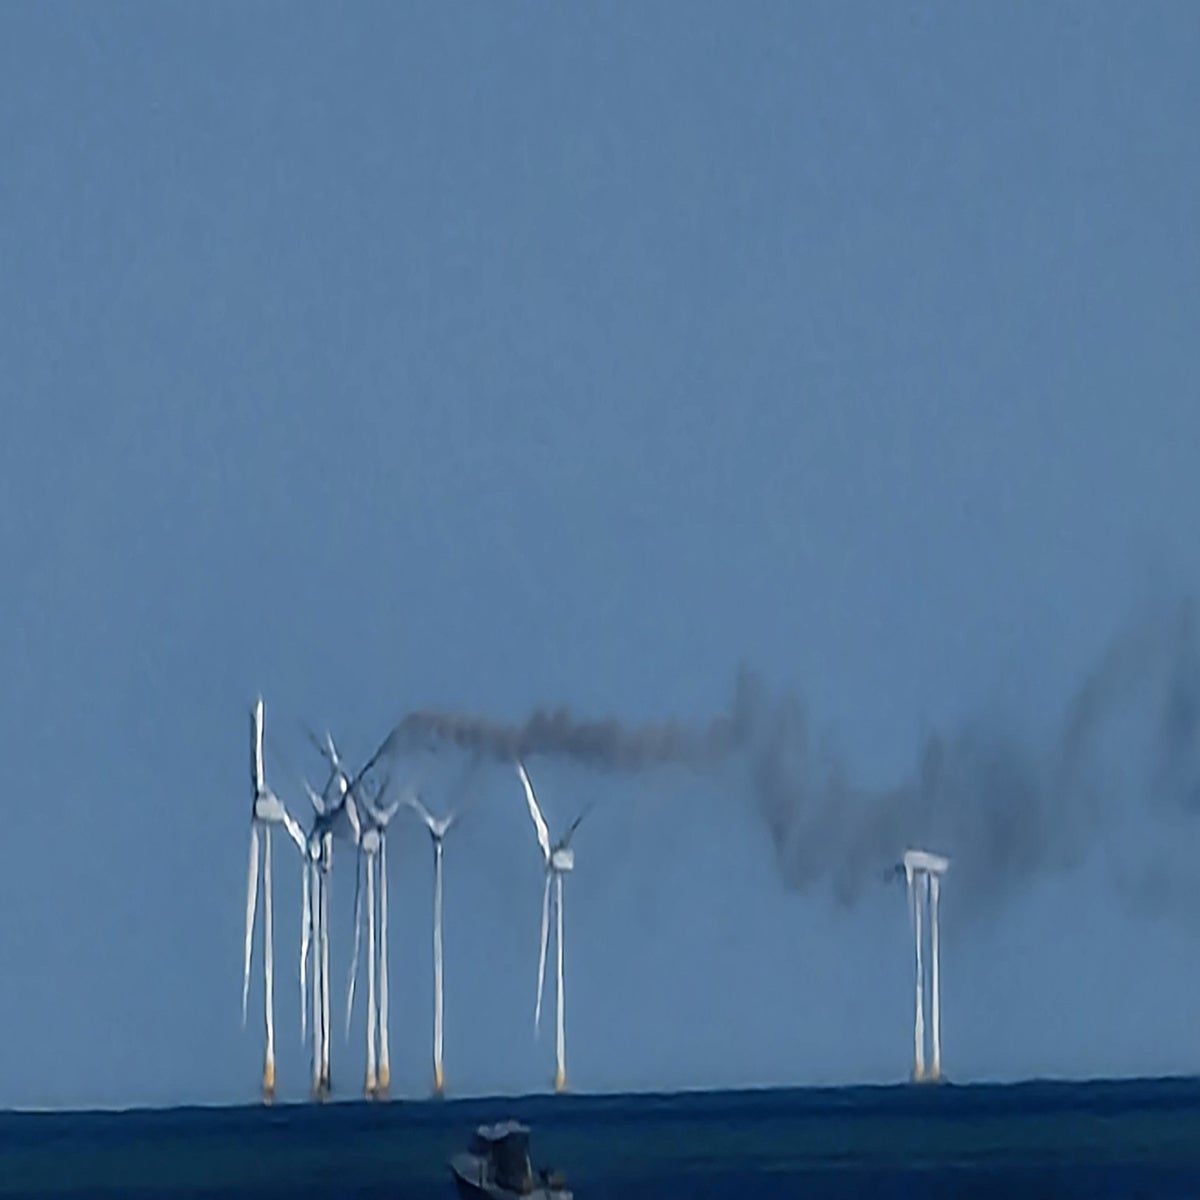 Wind turbine catches fire off British coast prompting evacuations